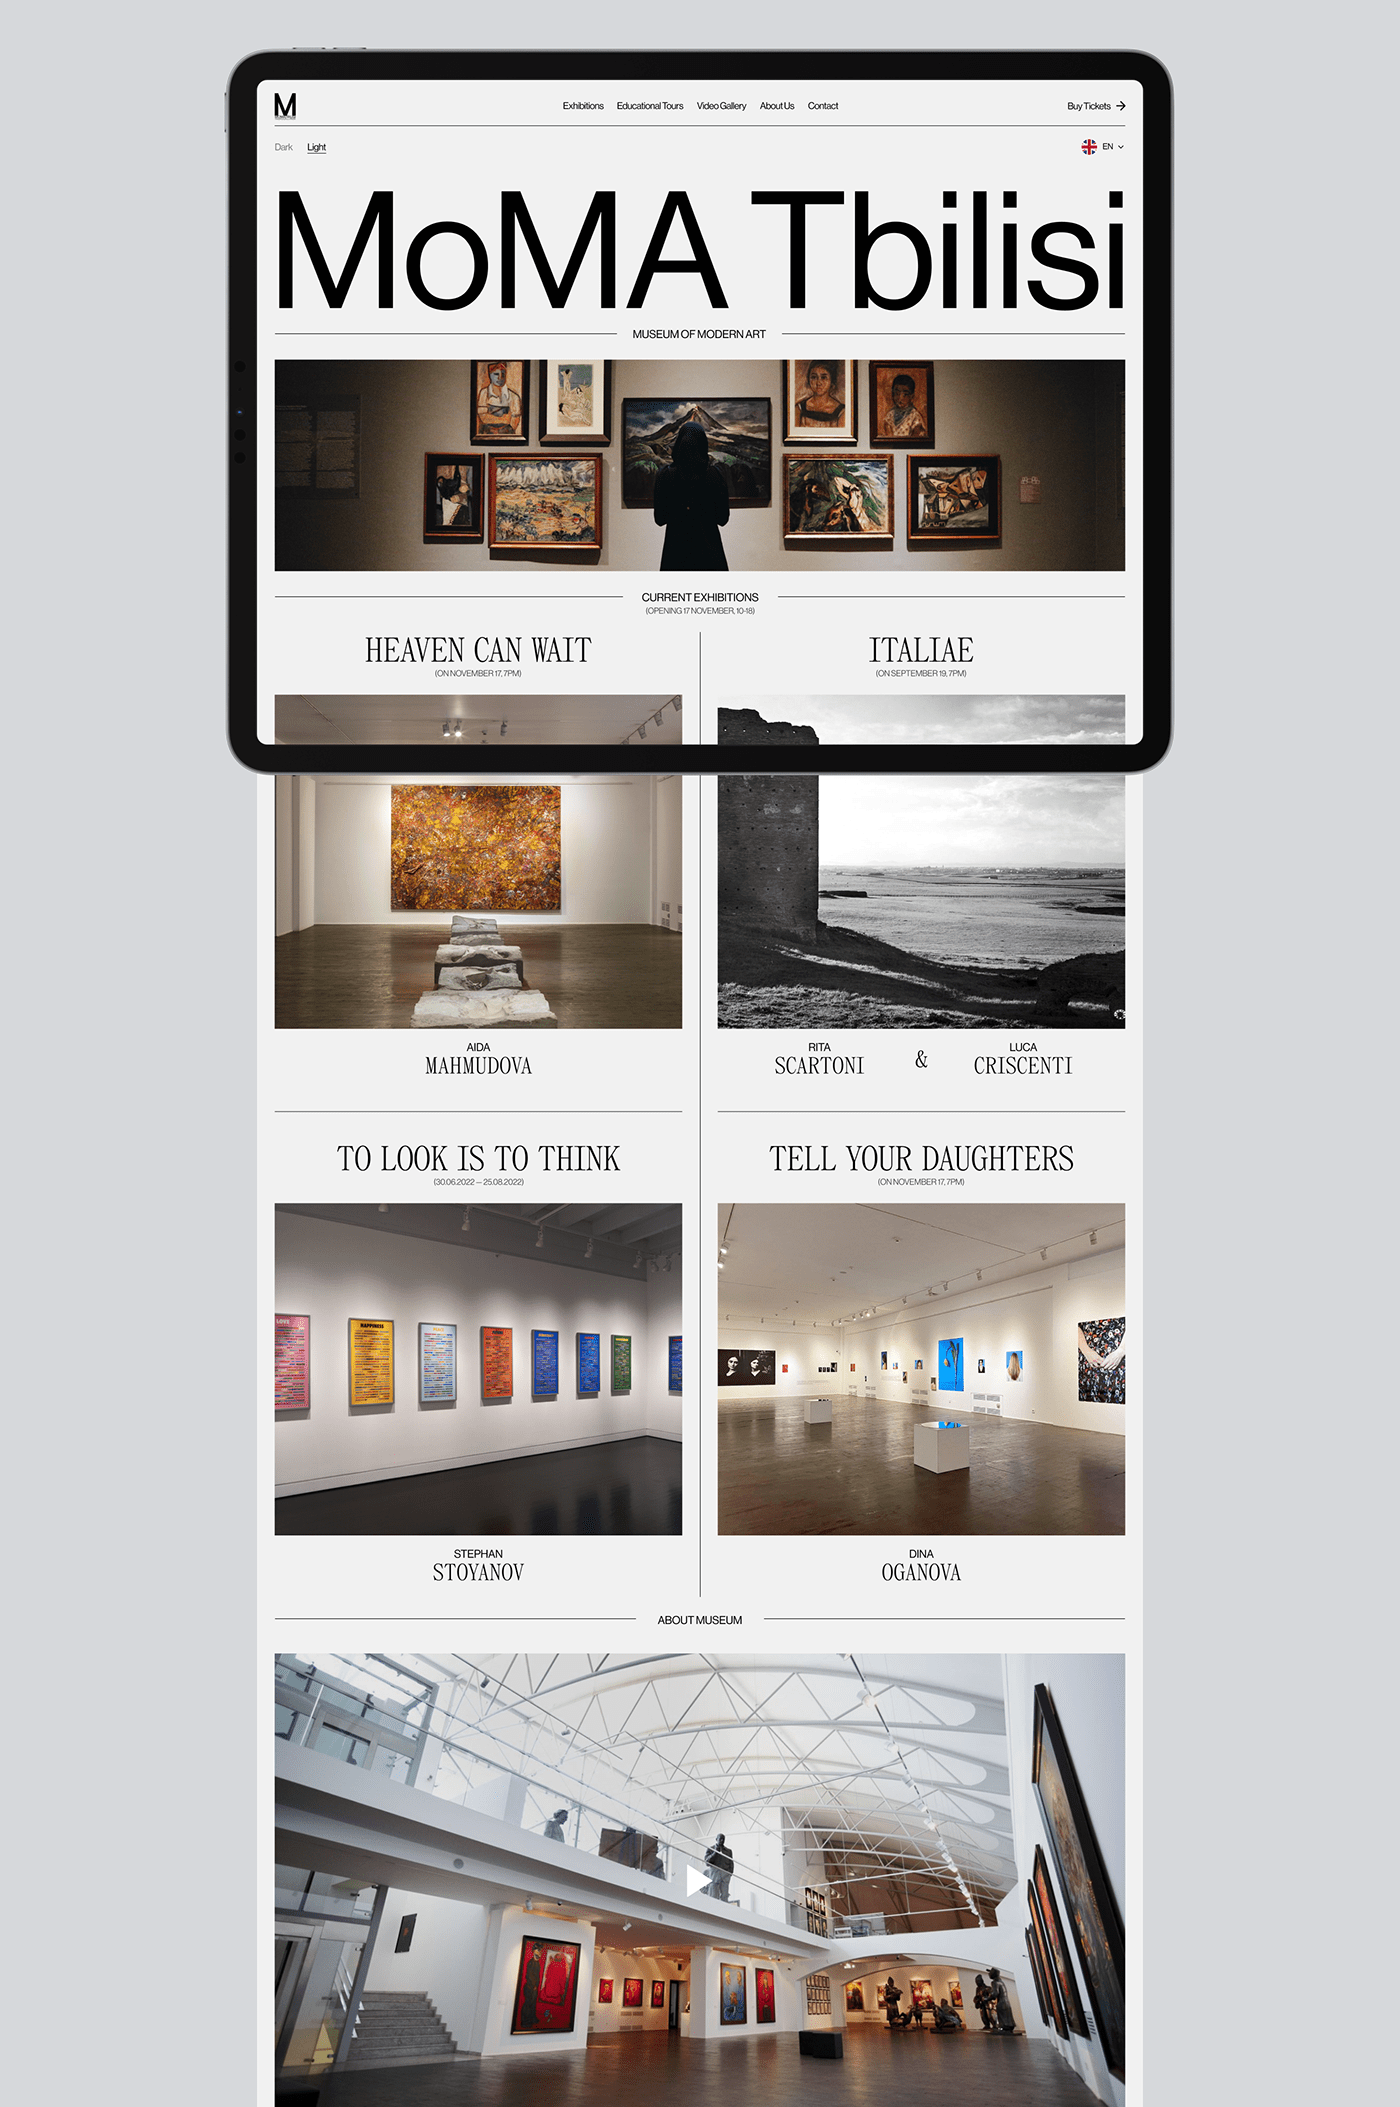 MoMA Tbilisi. Website Design & Visual Identity.